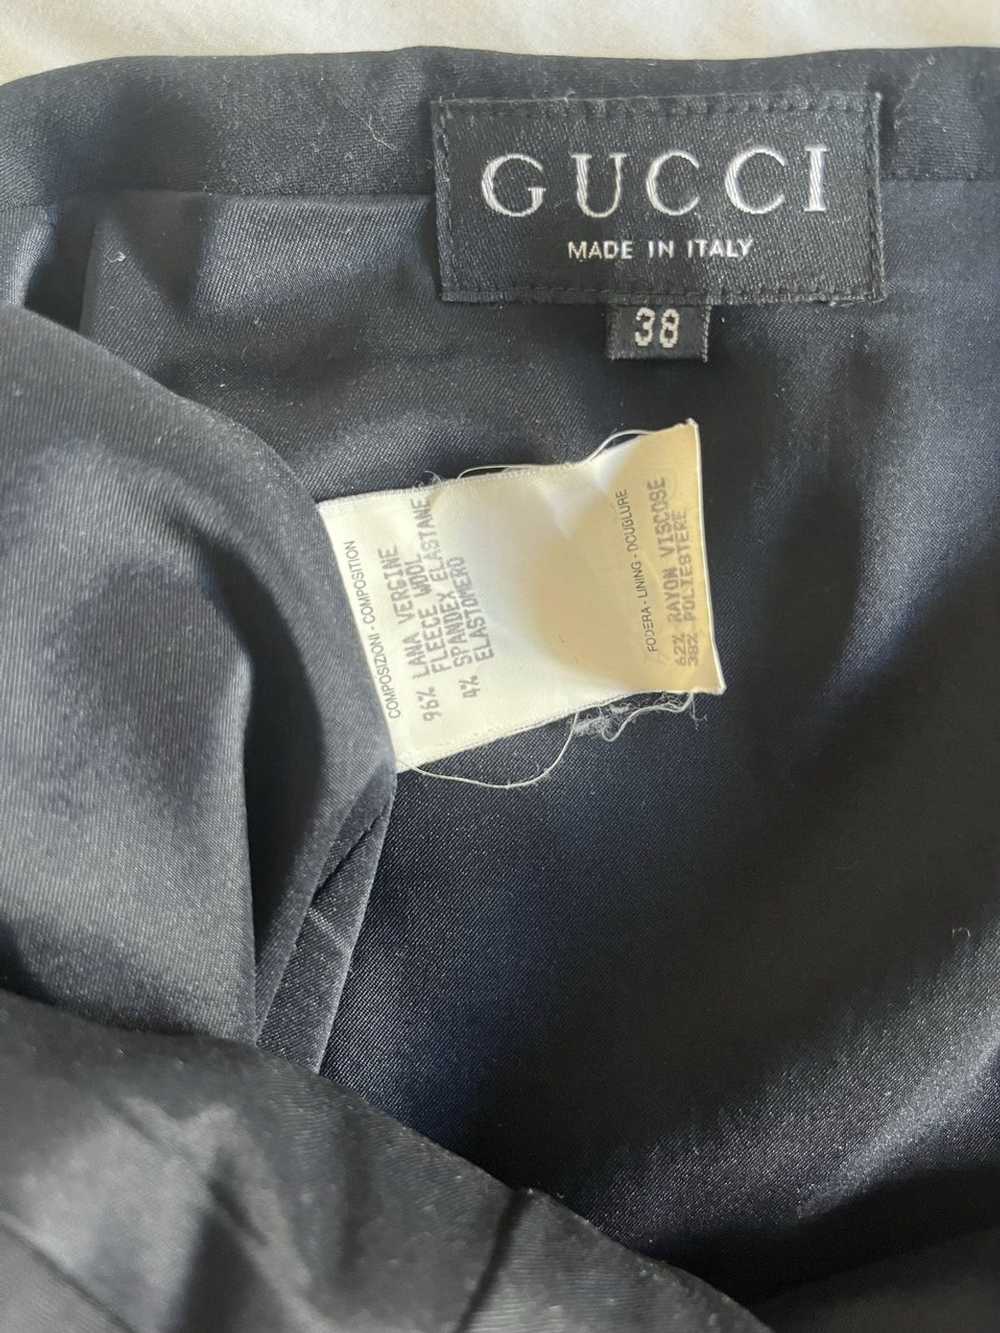 Gucci Gucci Tom Ford mini skirt - image 3